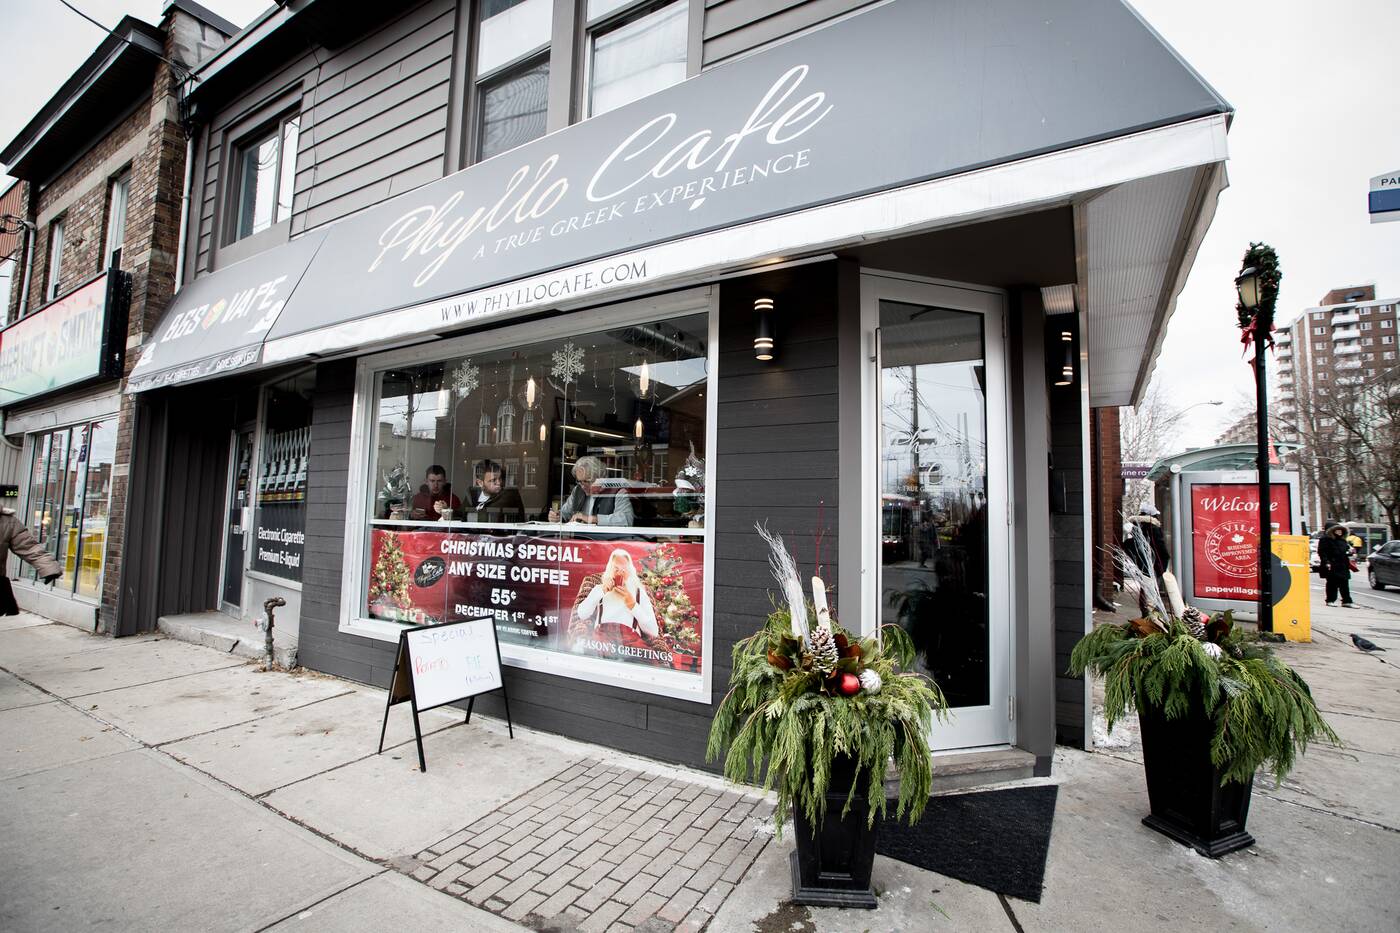 Phyllo Cafe Toronto